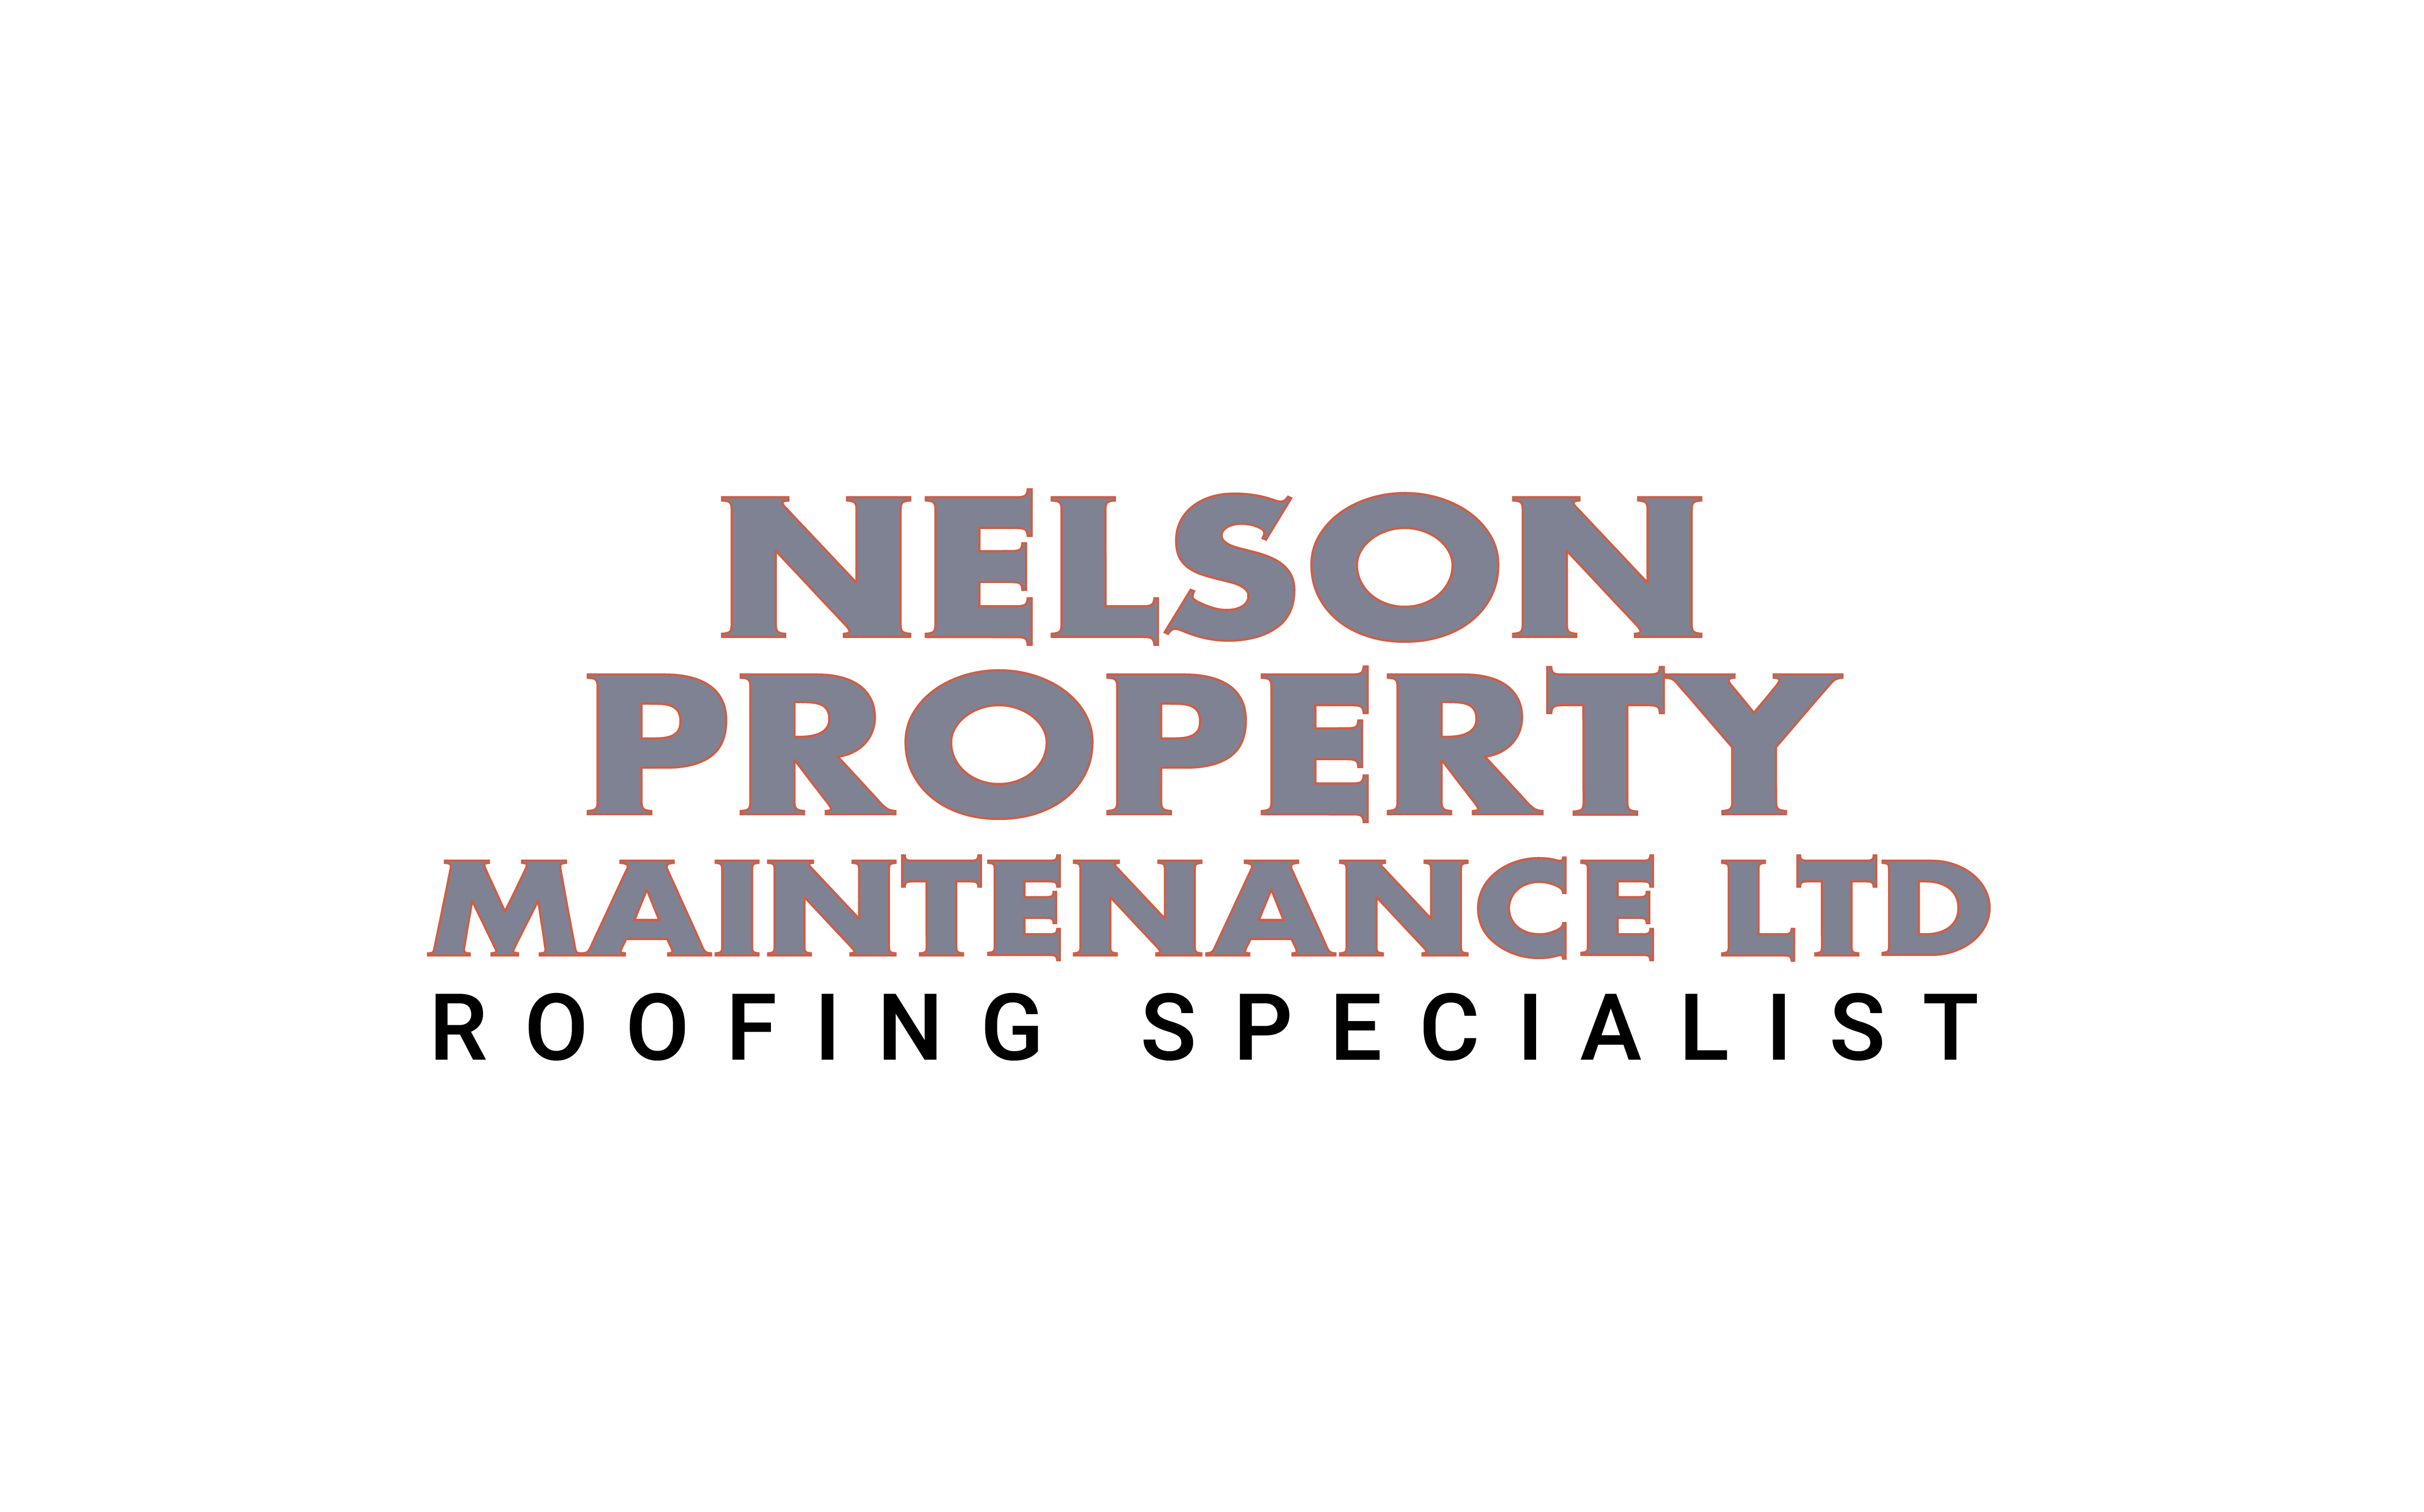 Nelson Property Maintenance Ltd